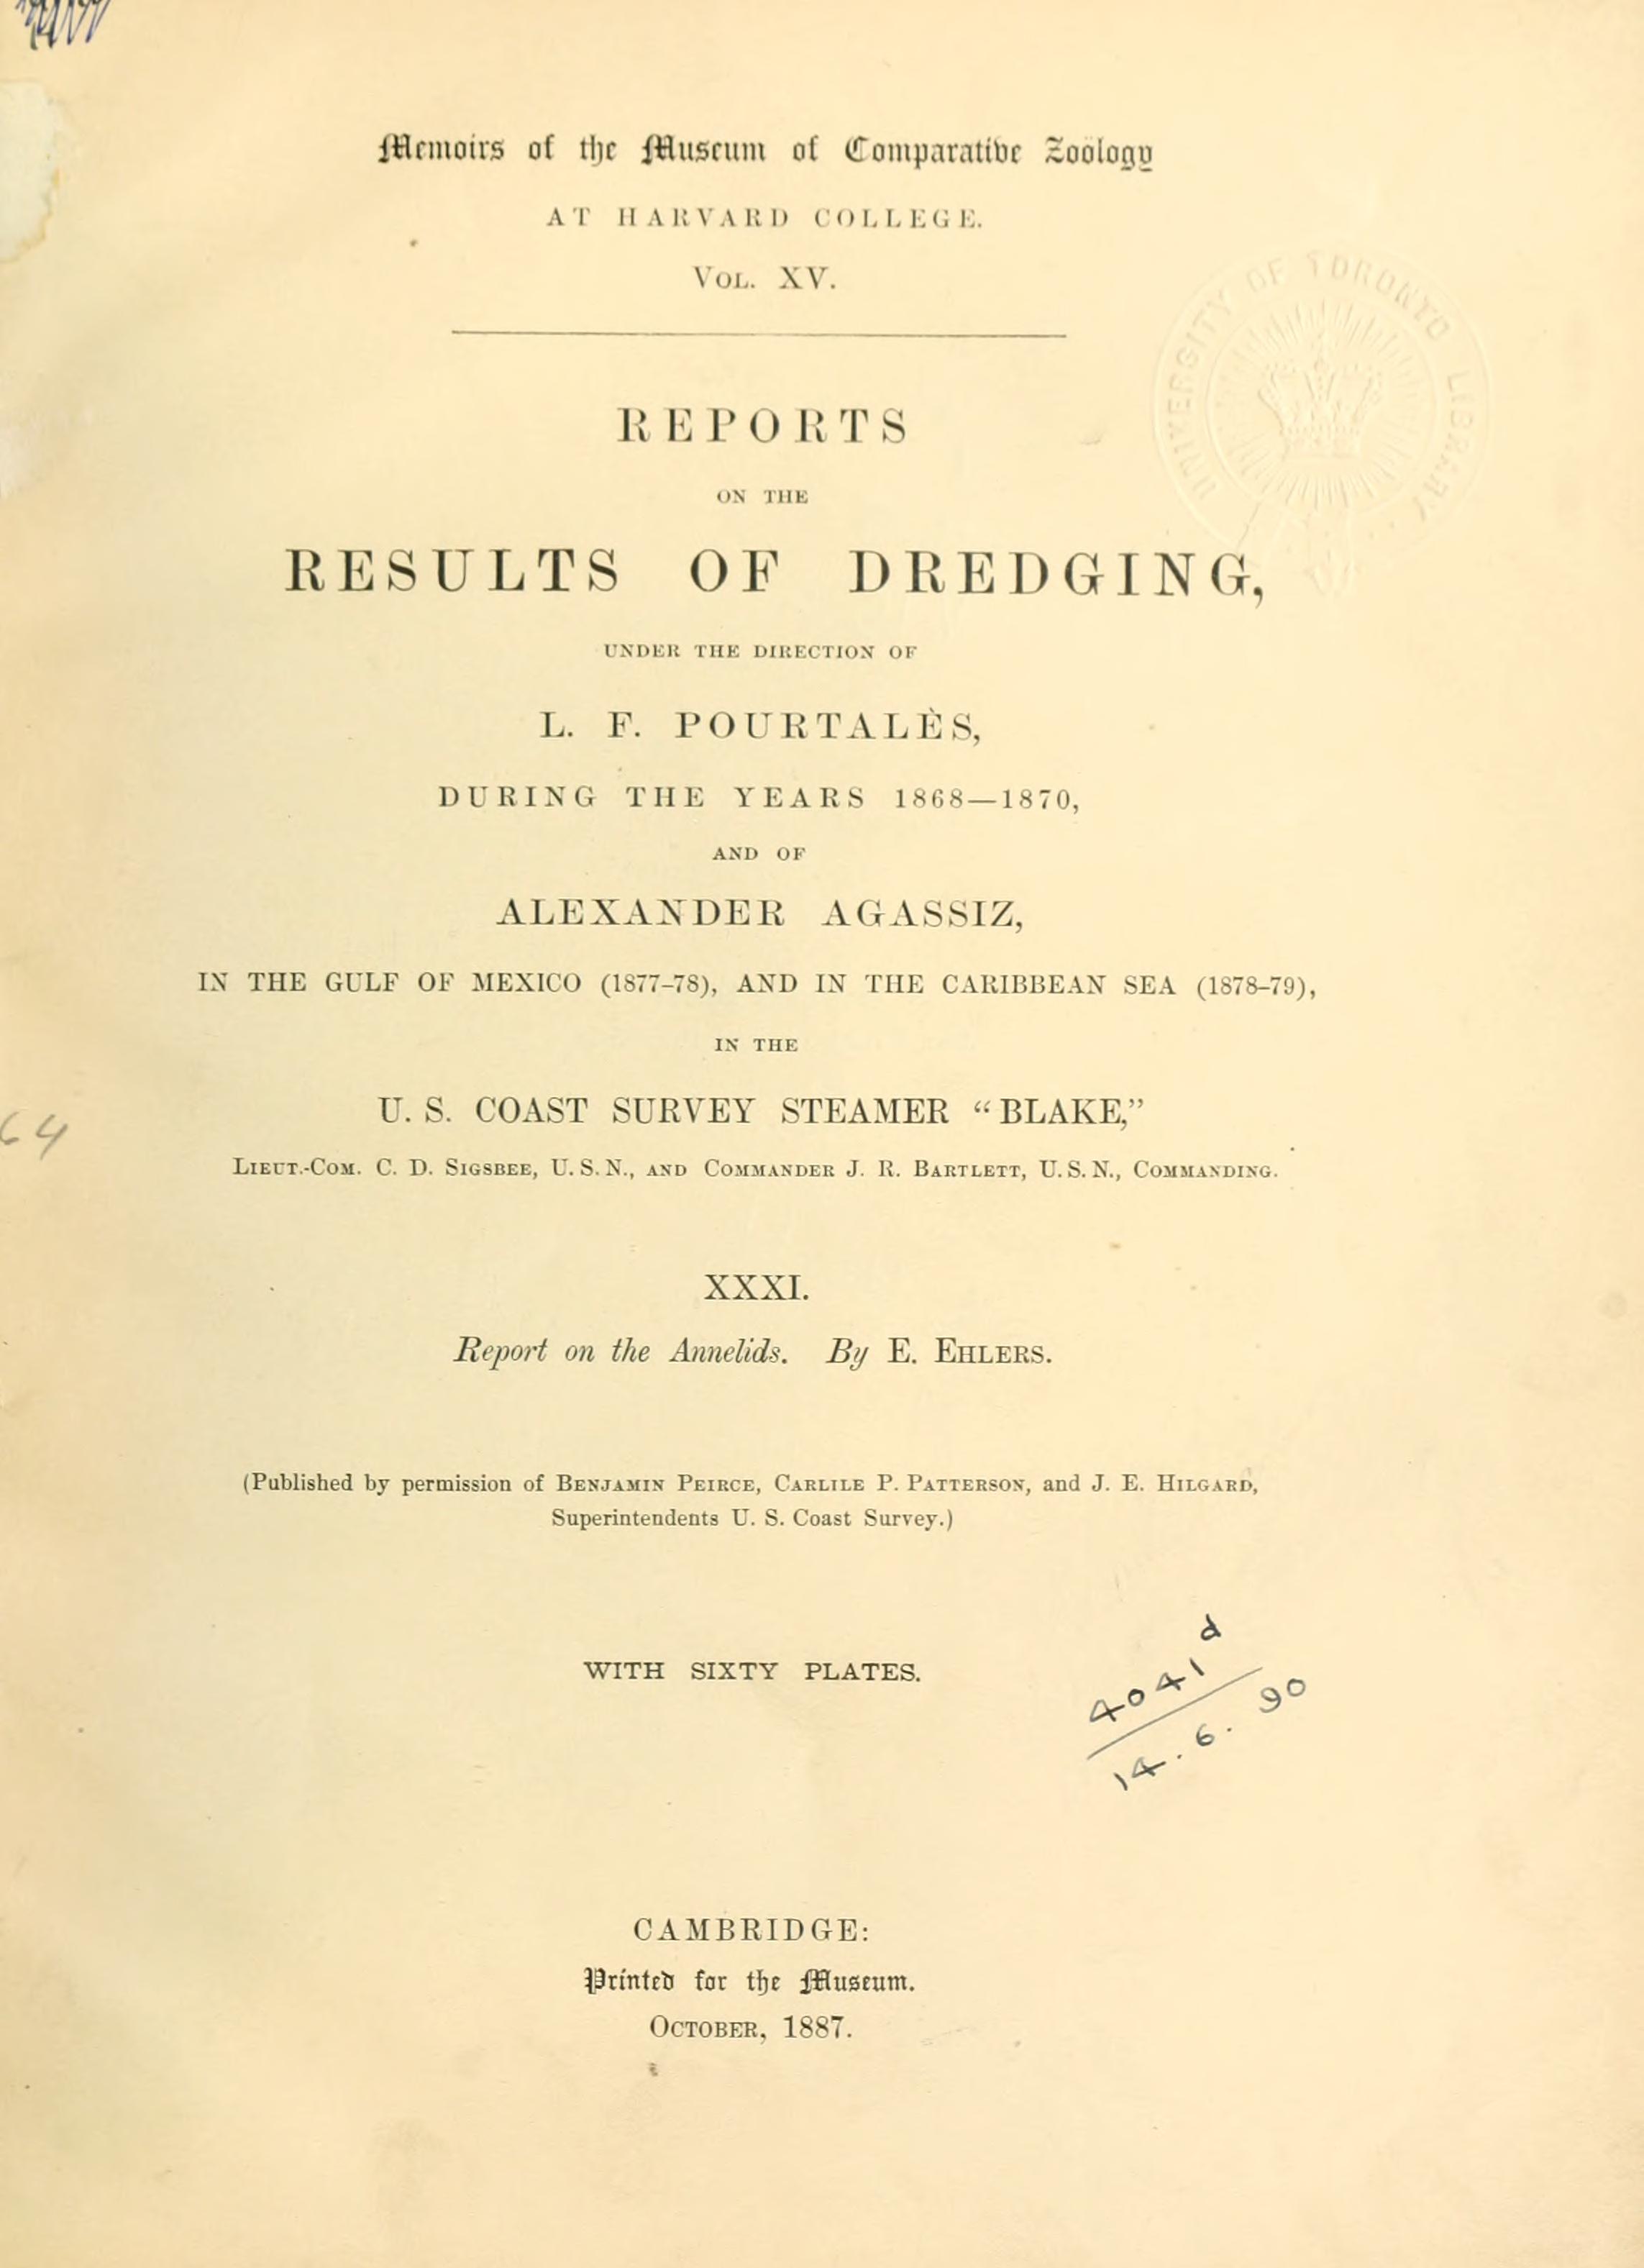 Media type: text, Ehlers 1887 Description: MCZ Memoirs Vol. XV no. 1